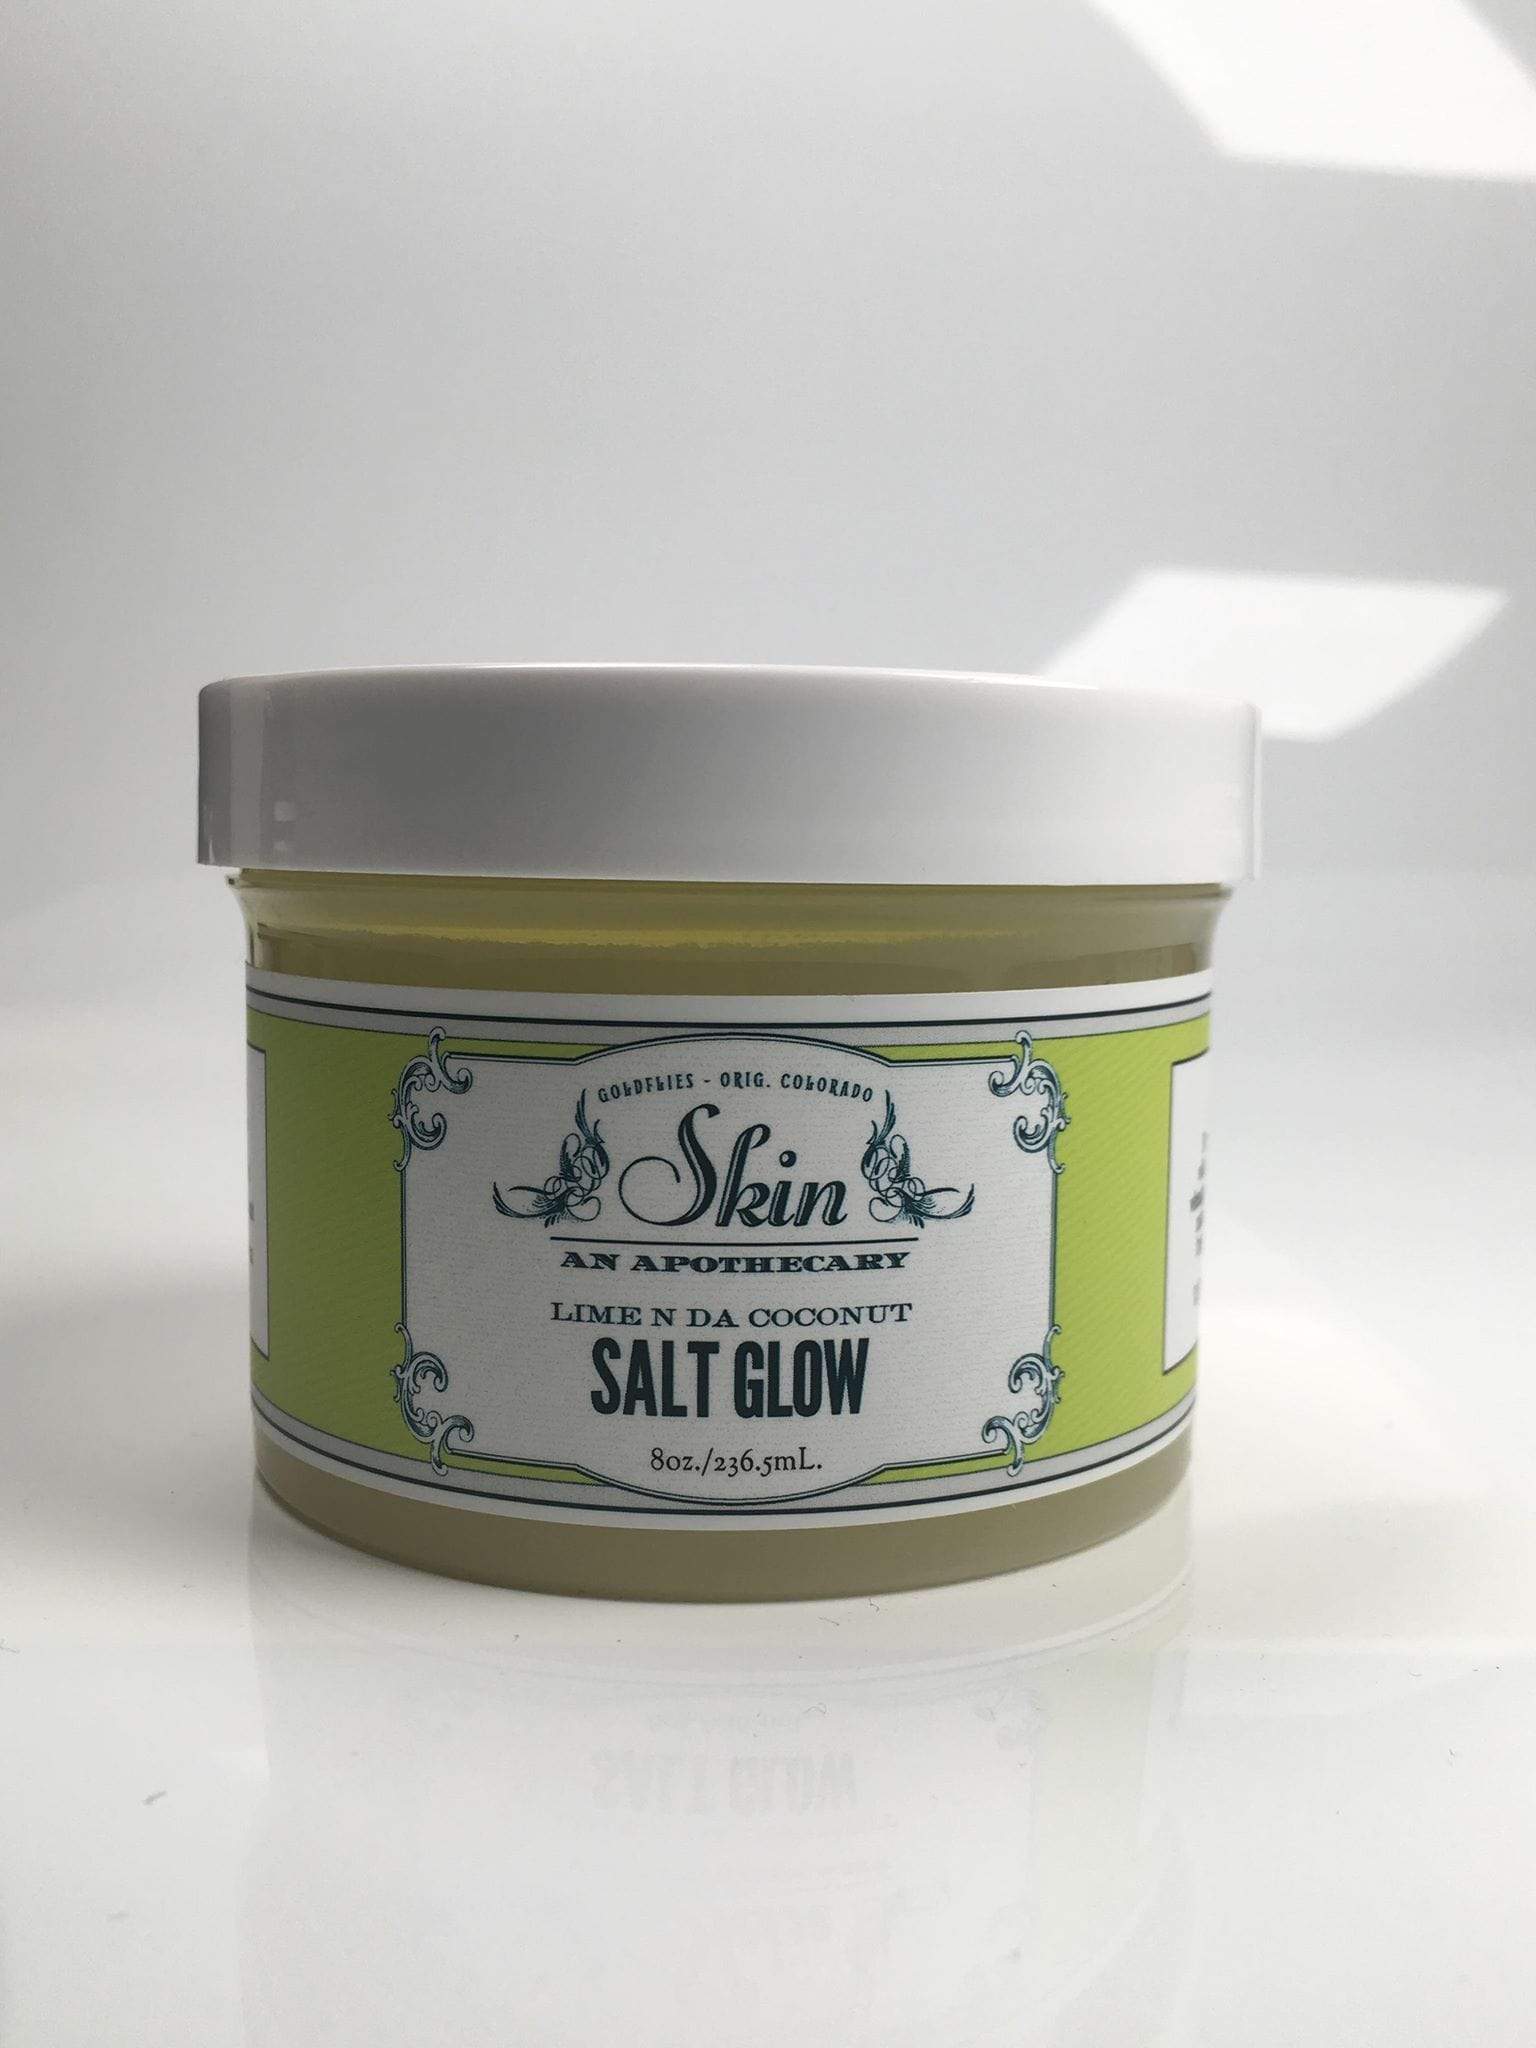 Skin An Apothecary Salt Glow - Lime N Da Coconut, 8oz, Body Scrub, London Loves Beauty